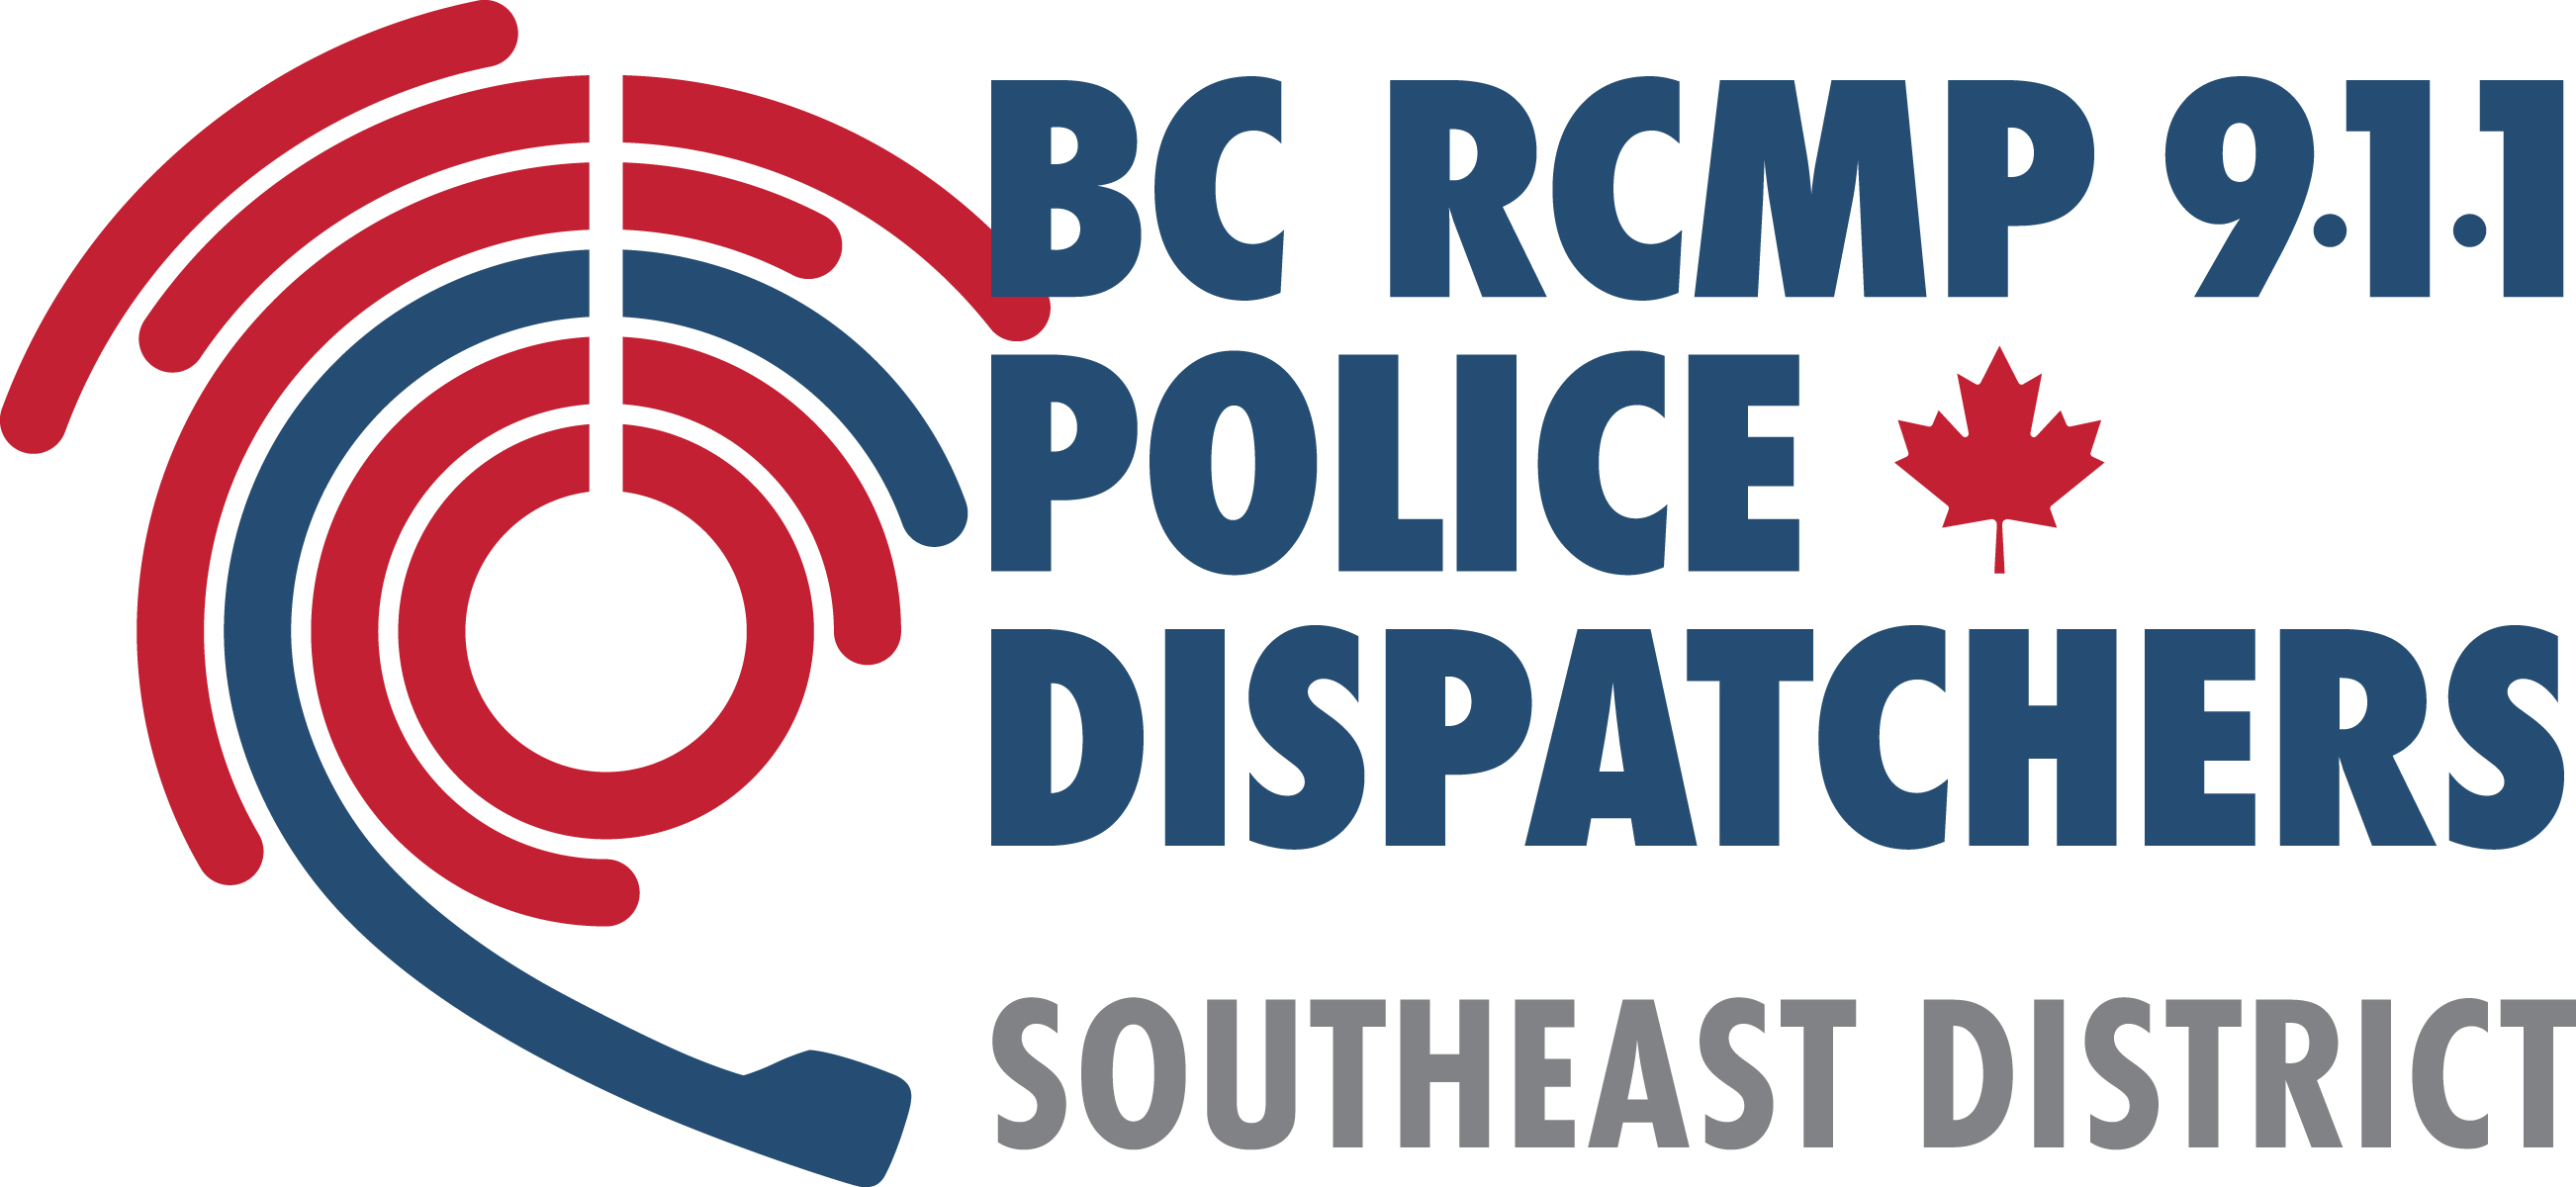 BC RCMP 911 Police Dispatchers Southeast District headset logo